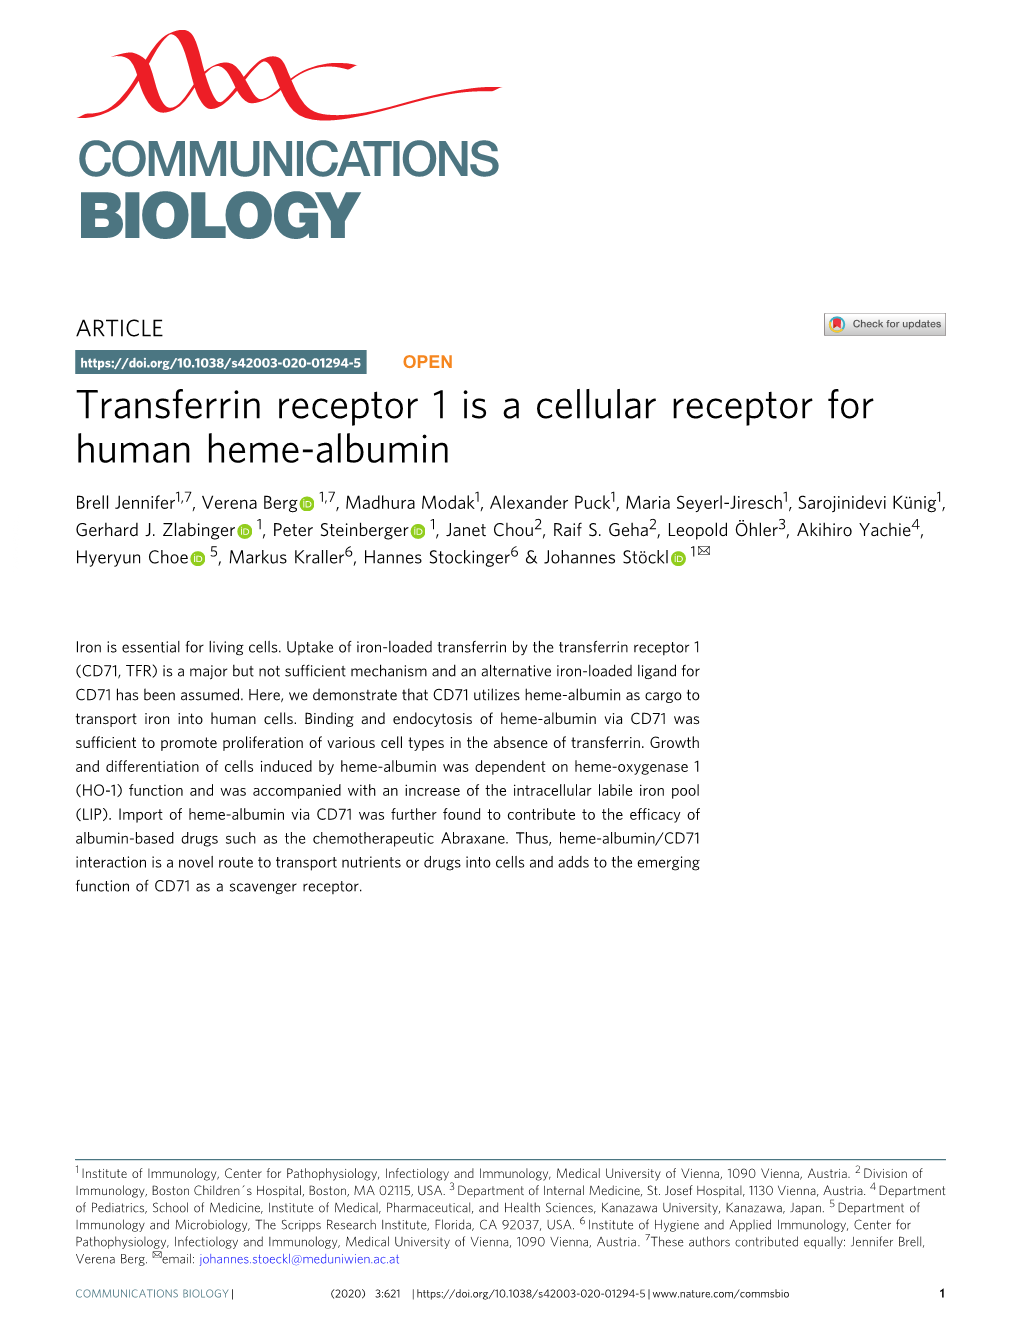 Transferrin Receptor 1 Is a Cellular Receptor for Human Heme-Albumin